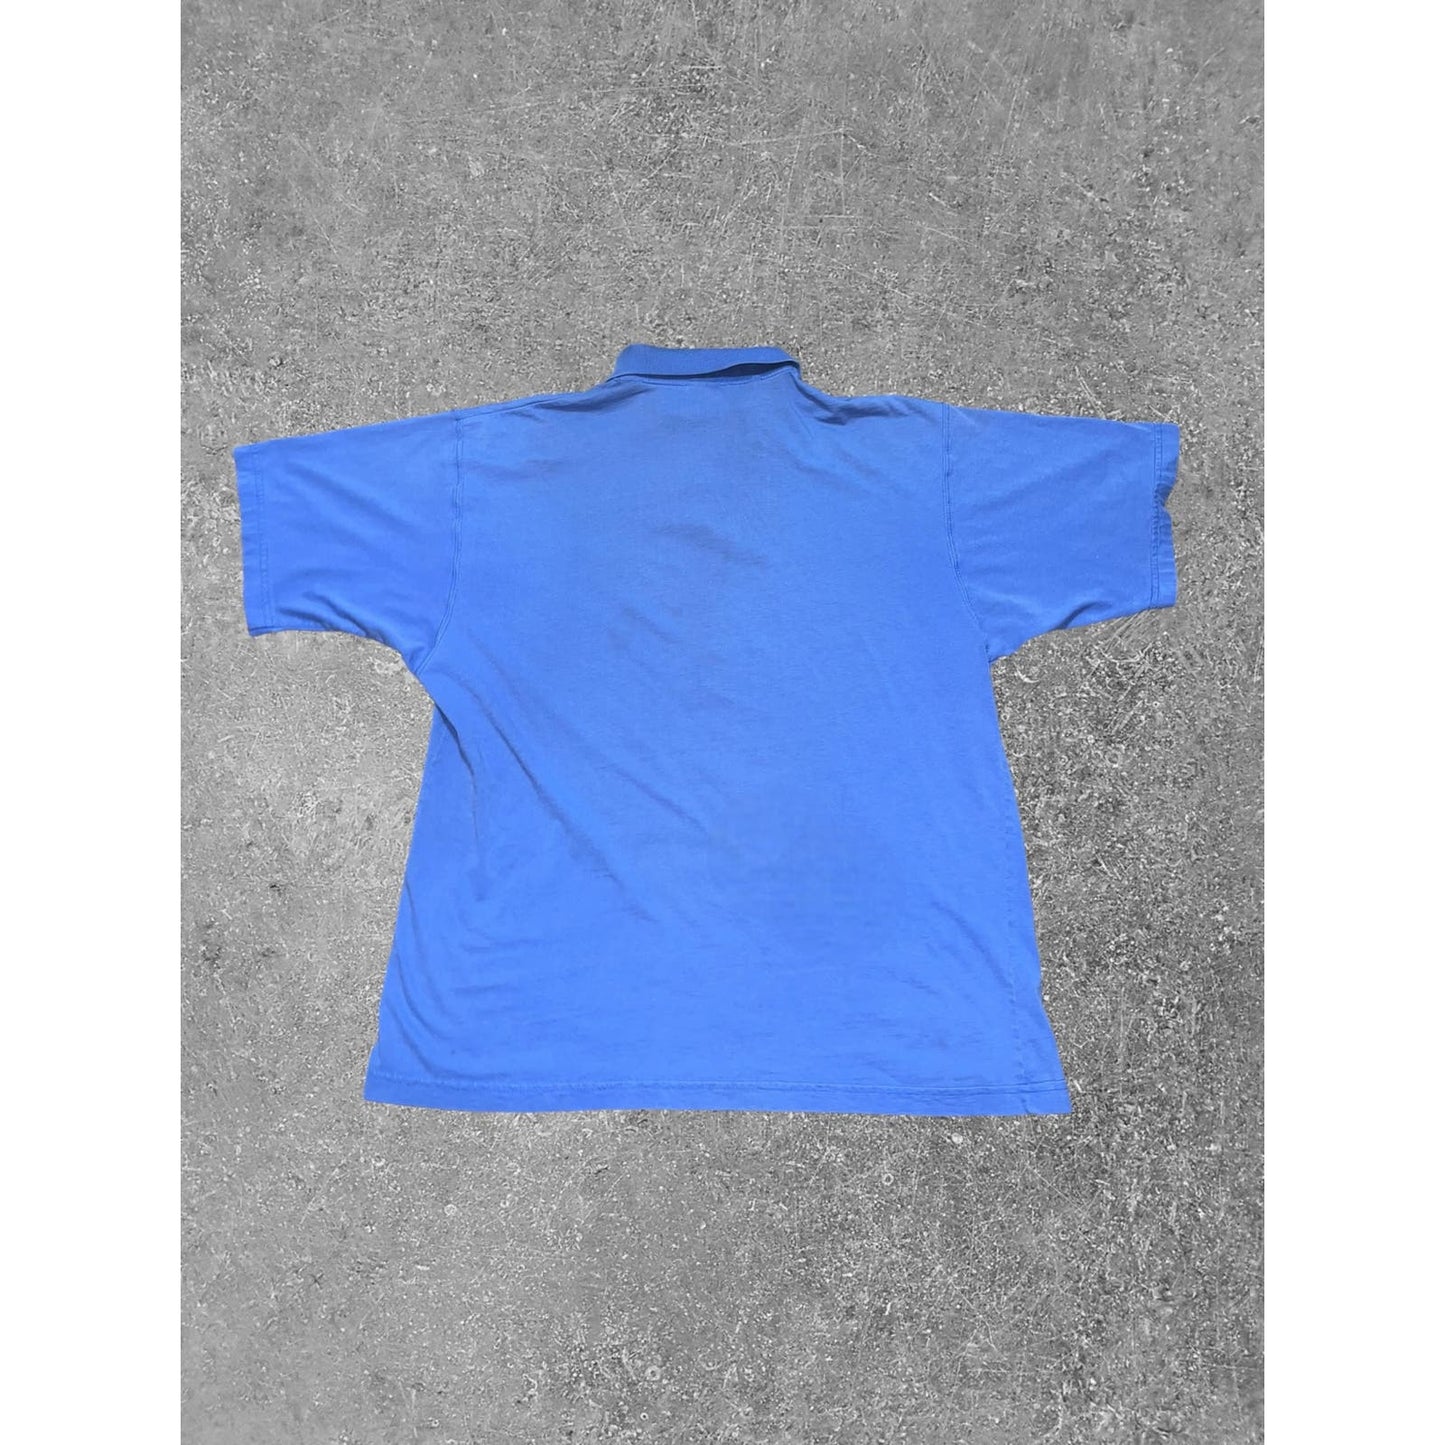 Light blue Nike Polo collar shirt